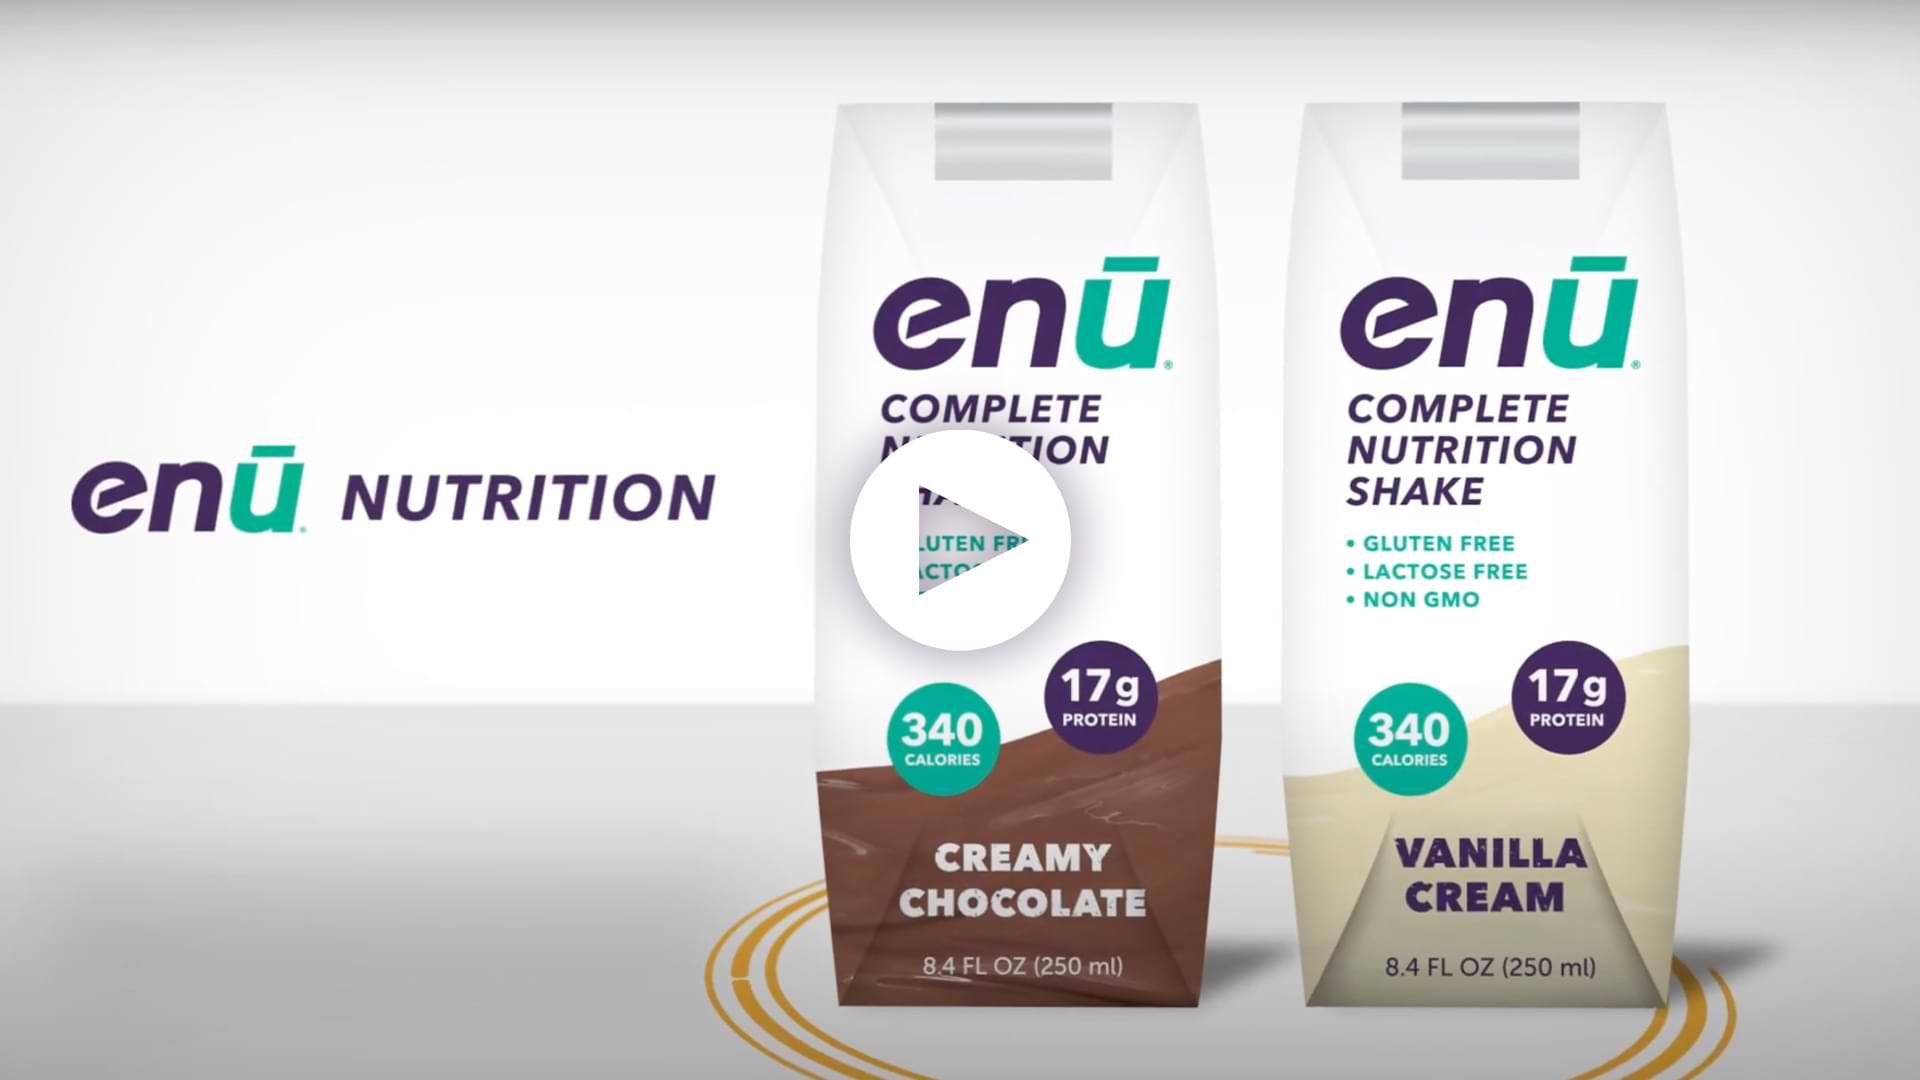 enu nutritional shakes video placeholder - New Homepage